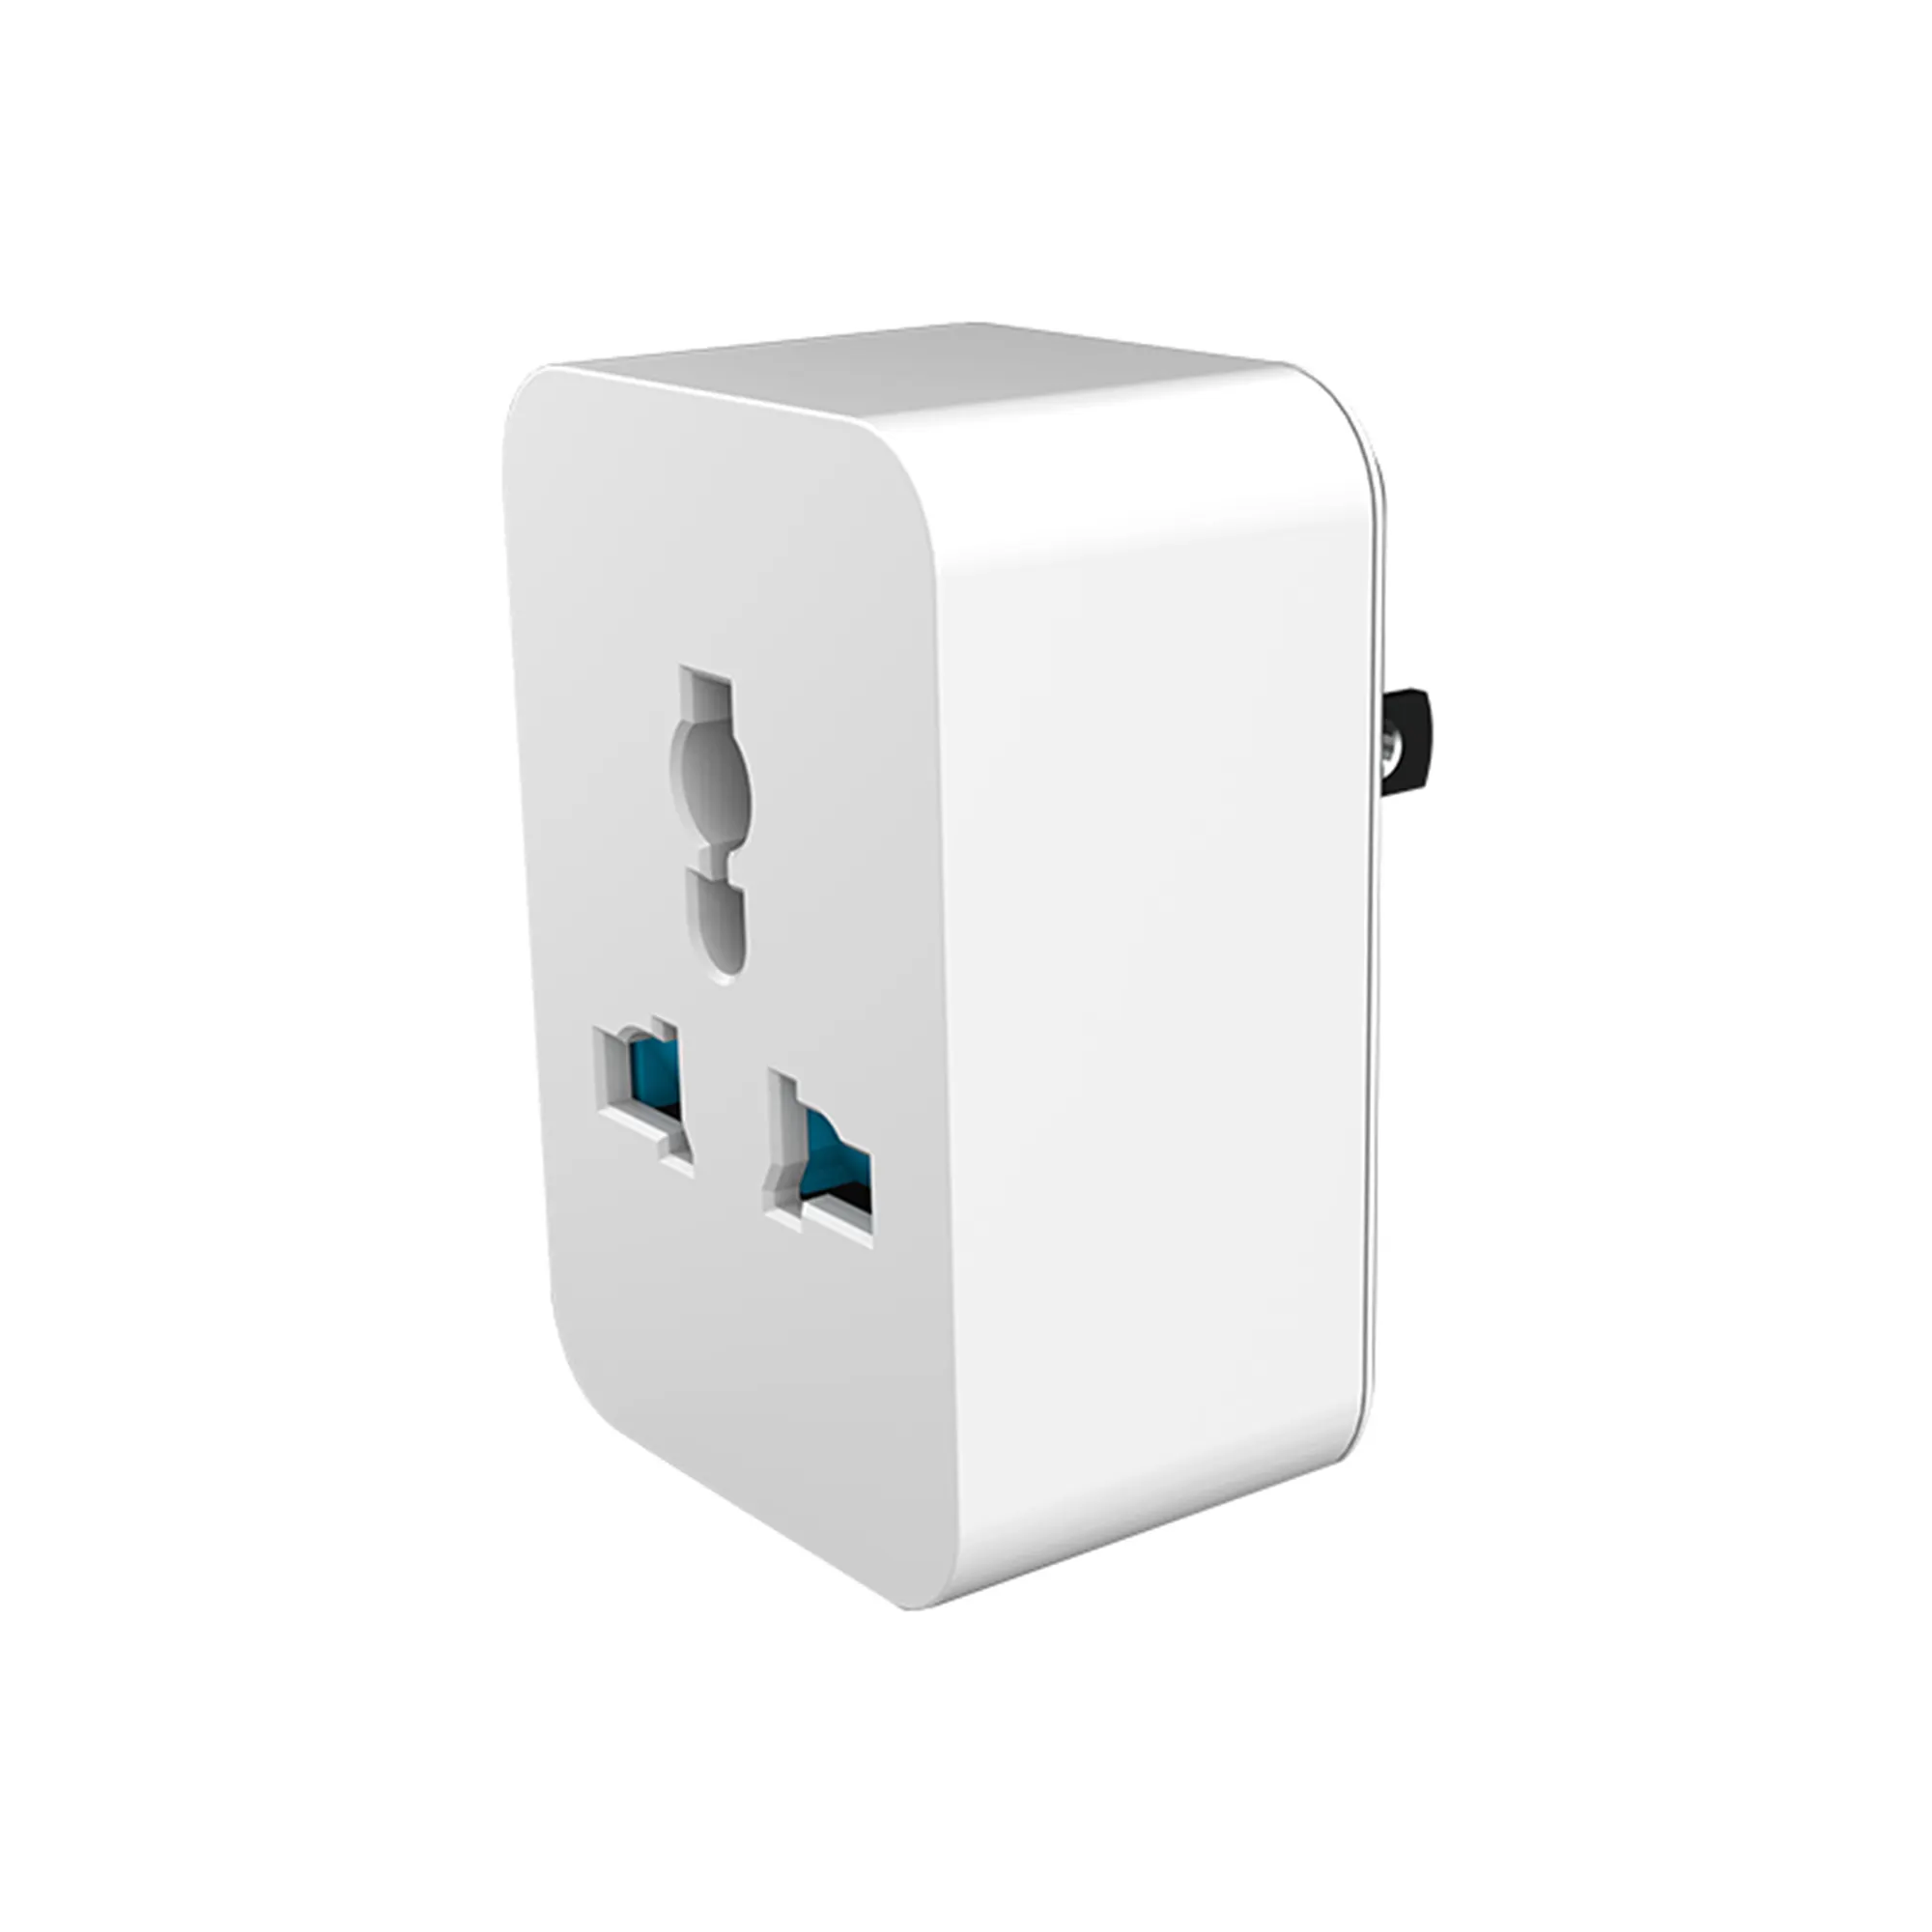 Tuya-Mini enchufe inteligente con WiFi, toma de corriente Universal, Smart Life, 16A, pared, Alexa, enchufe controlado por WiFi